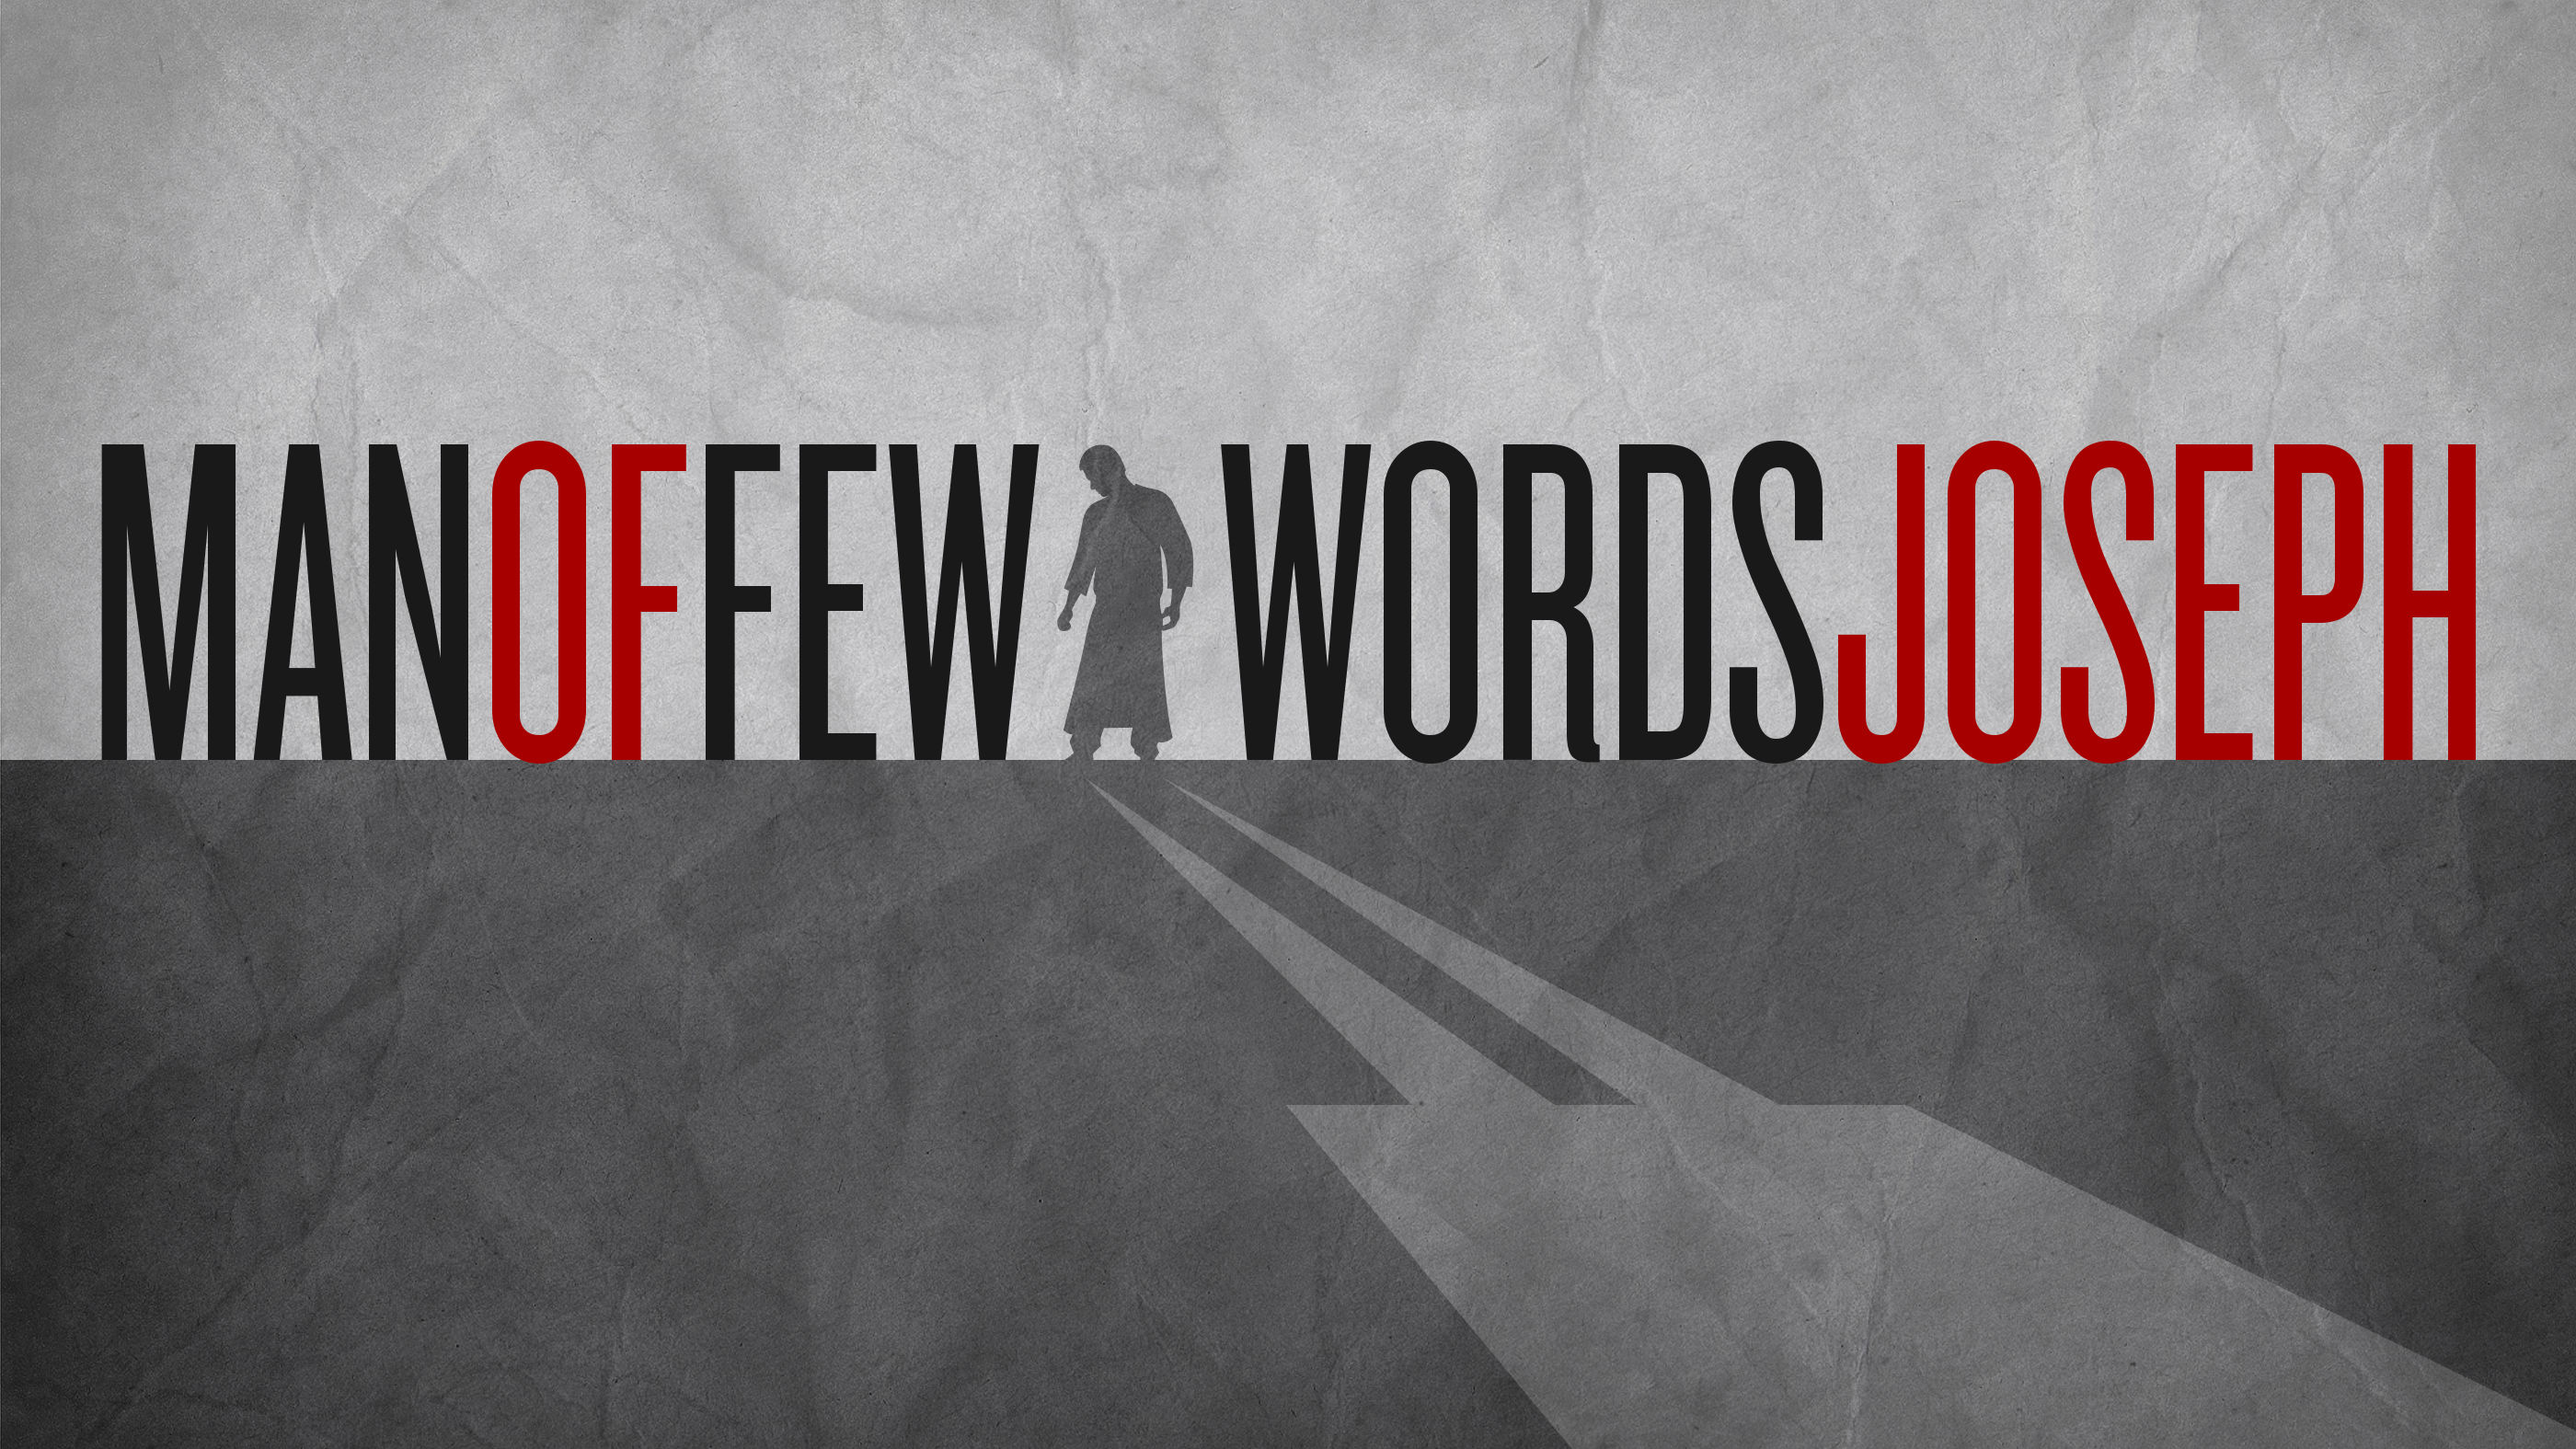 Man of Few Words: Joseph